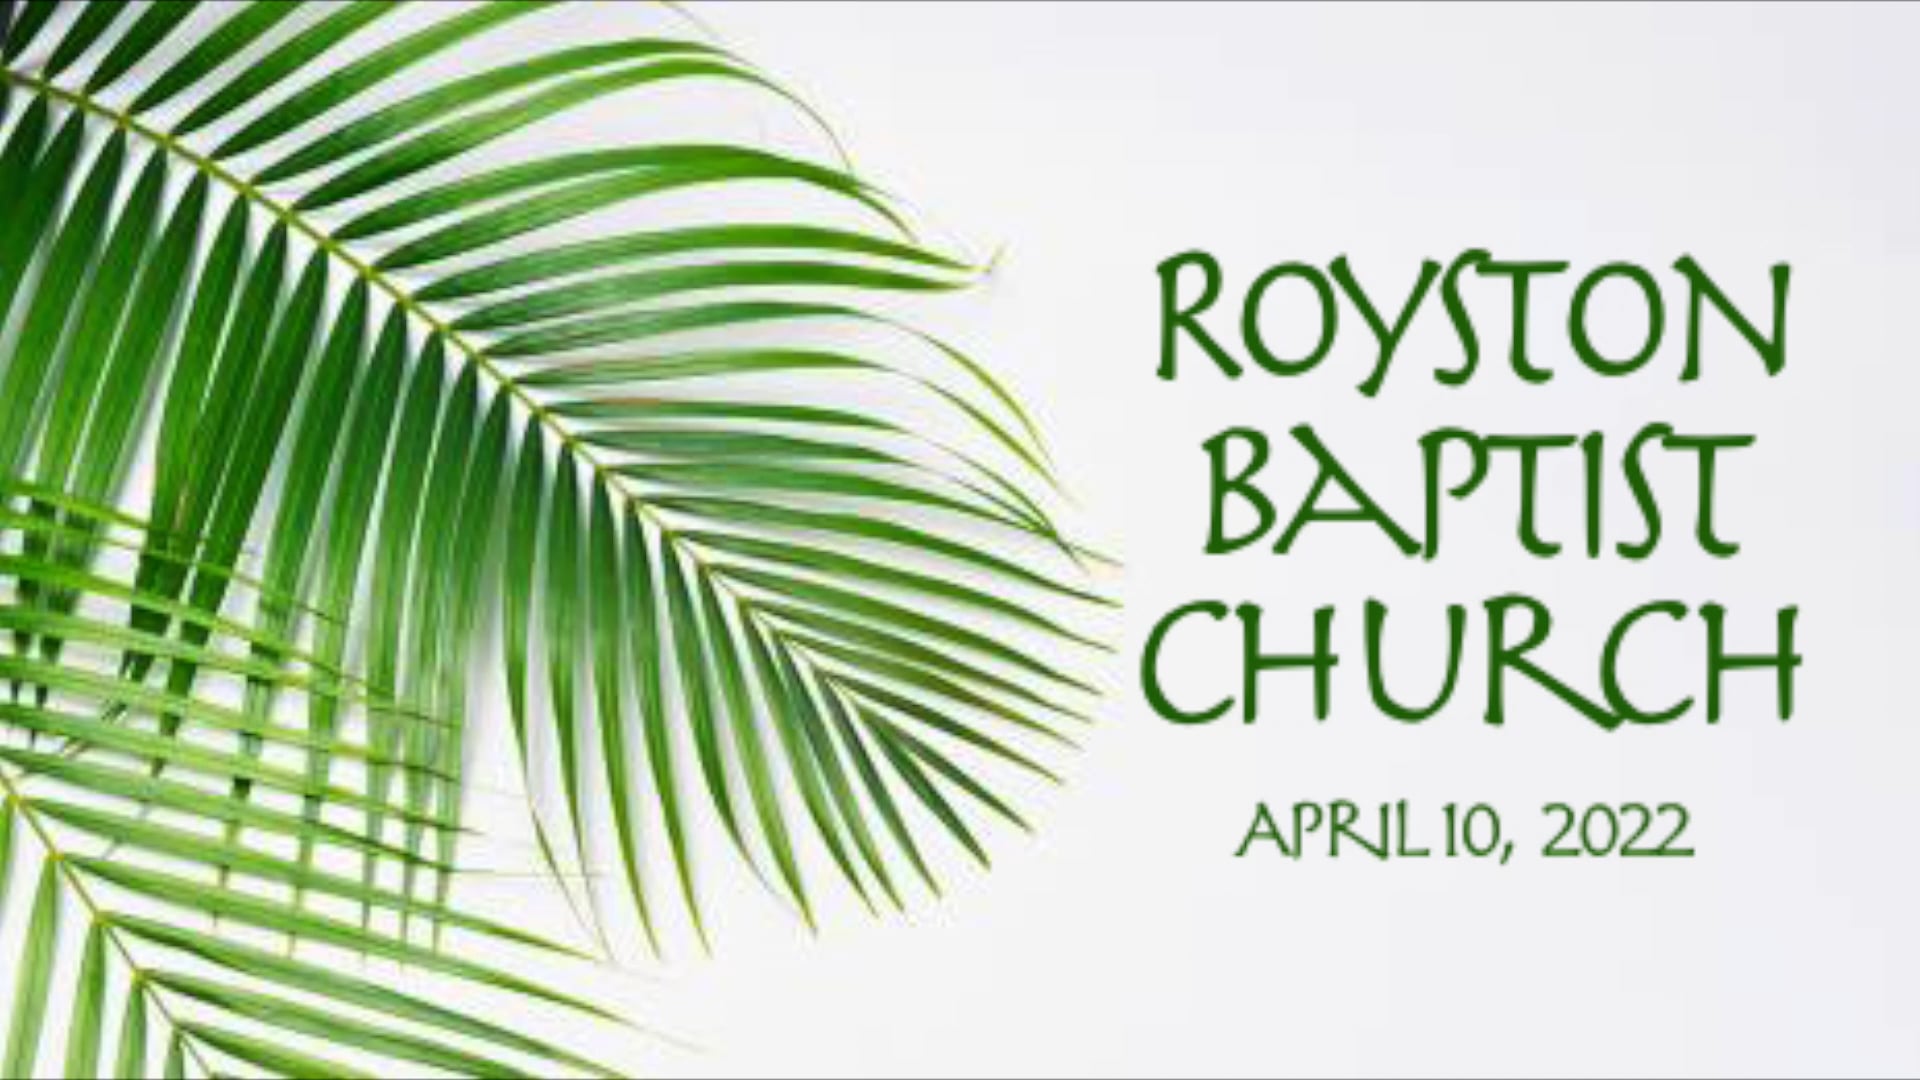 Royston Baptist Church 11 AM Worship Service Message for Apr. 10, 2022